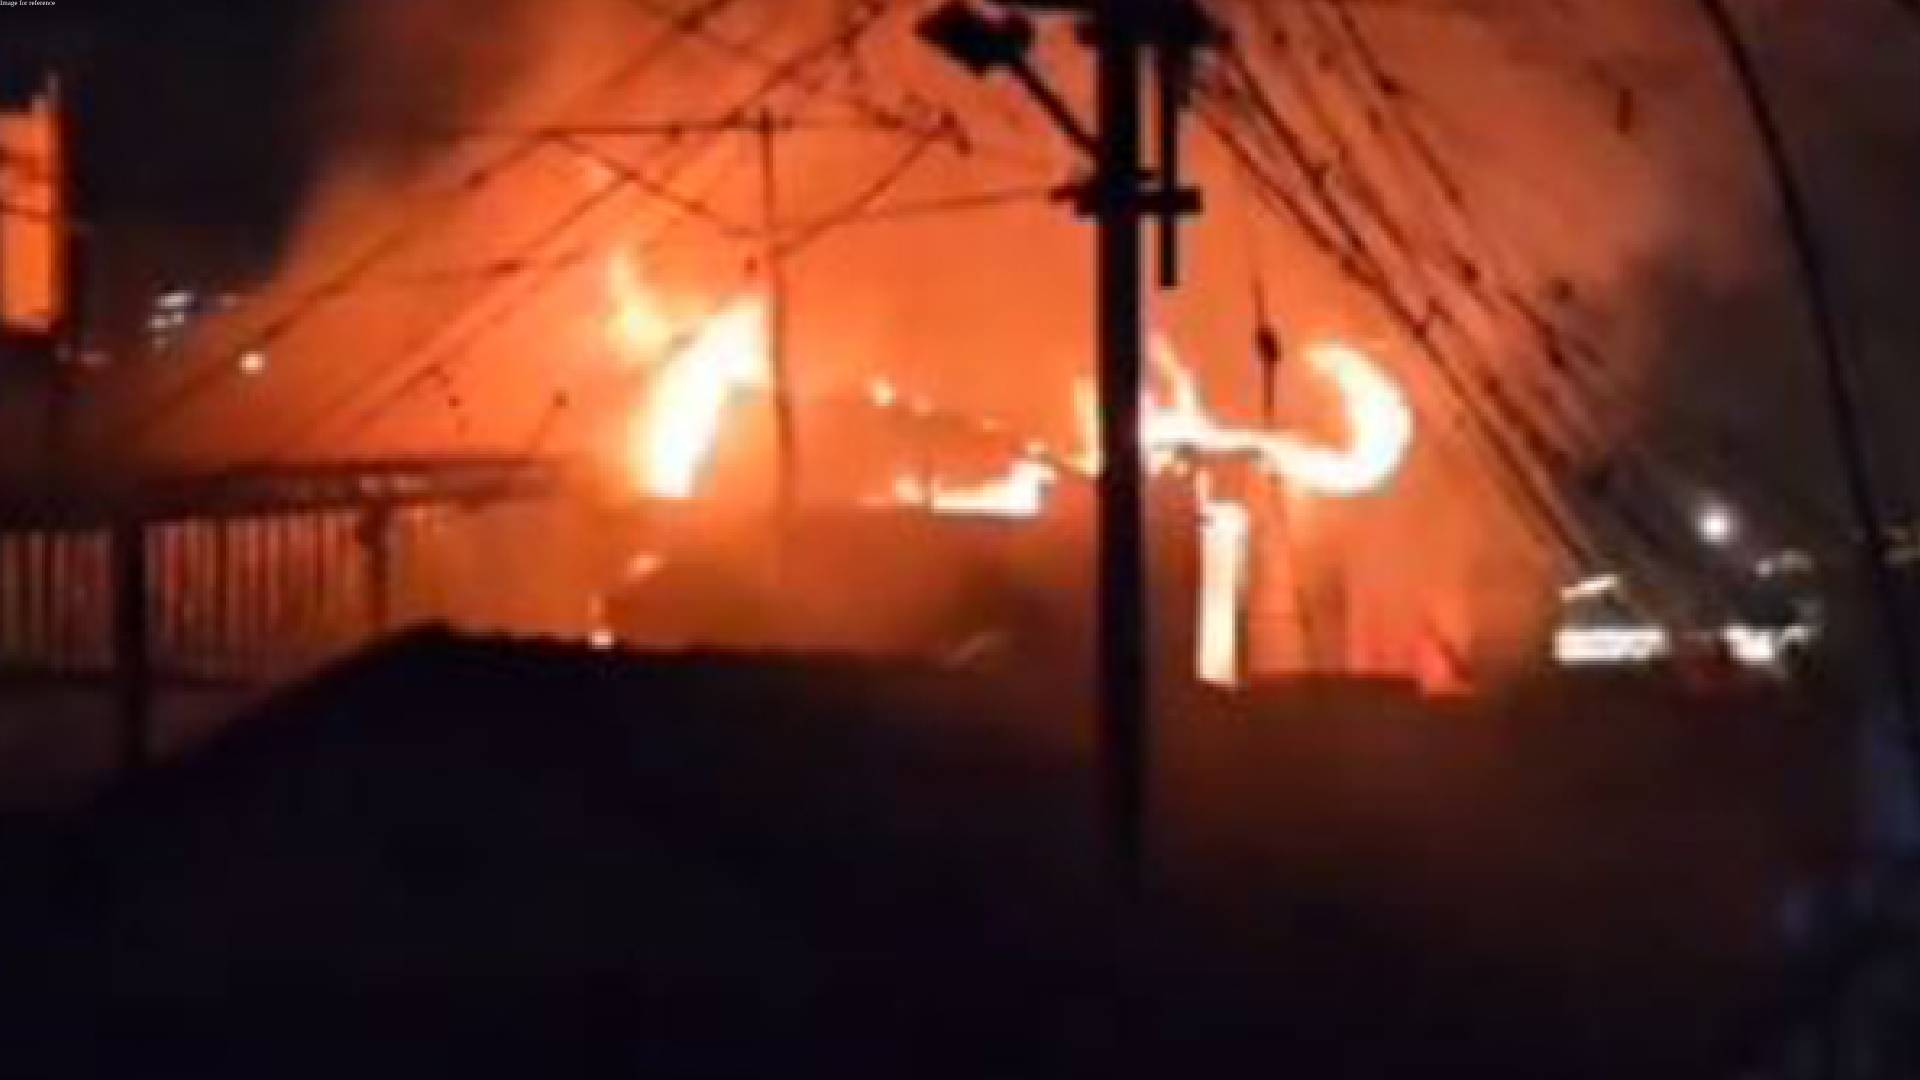 Tamil Nadu: Fire breaks out in house in Ooty